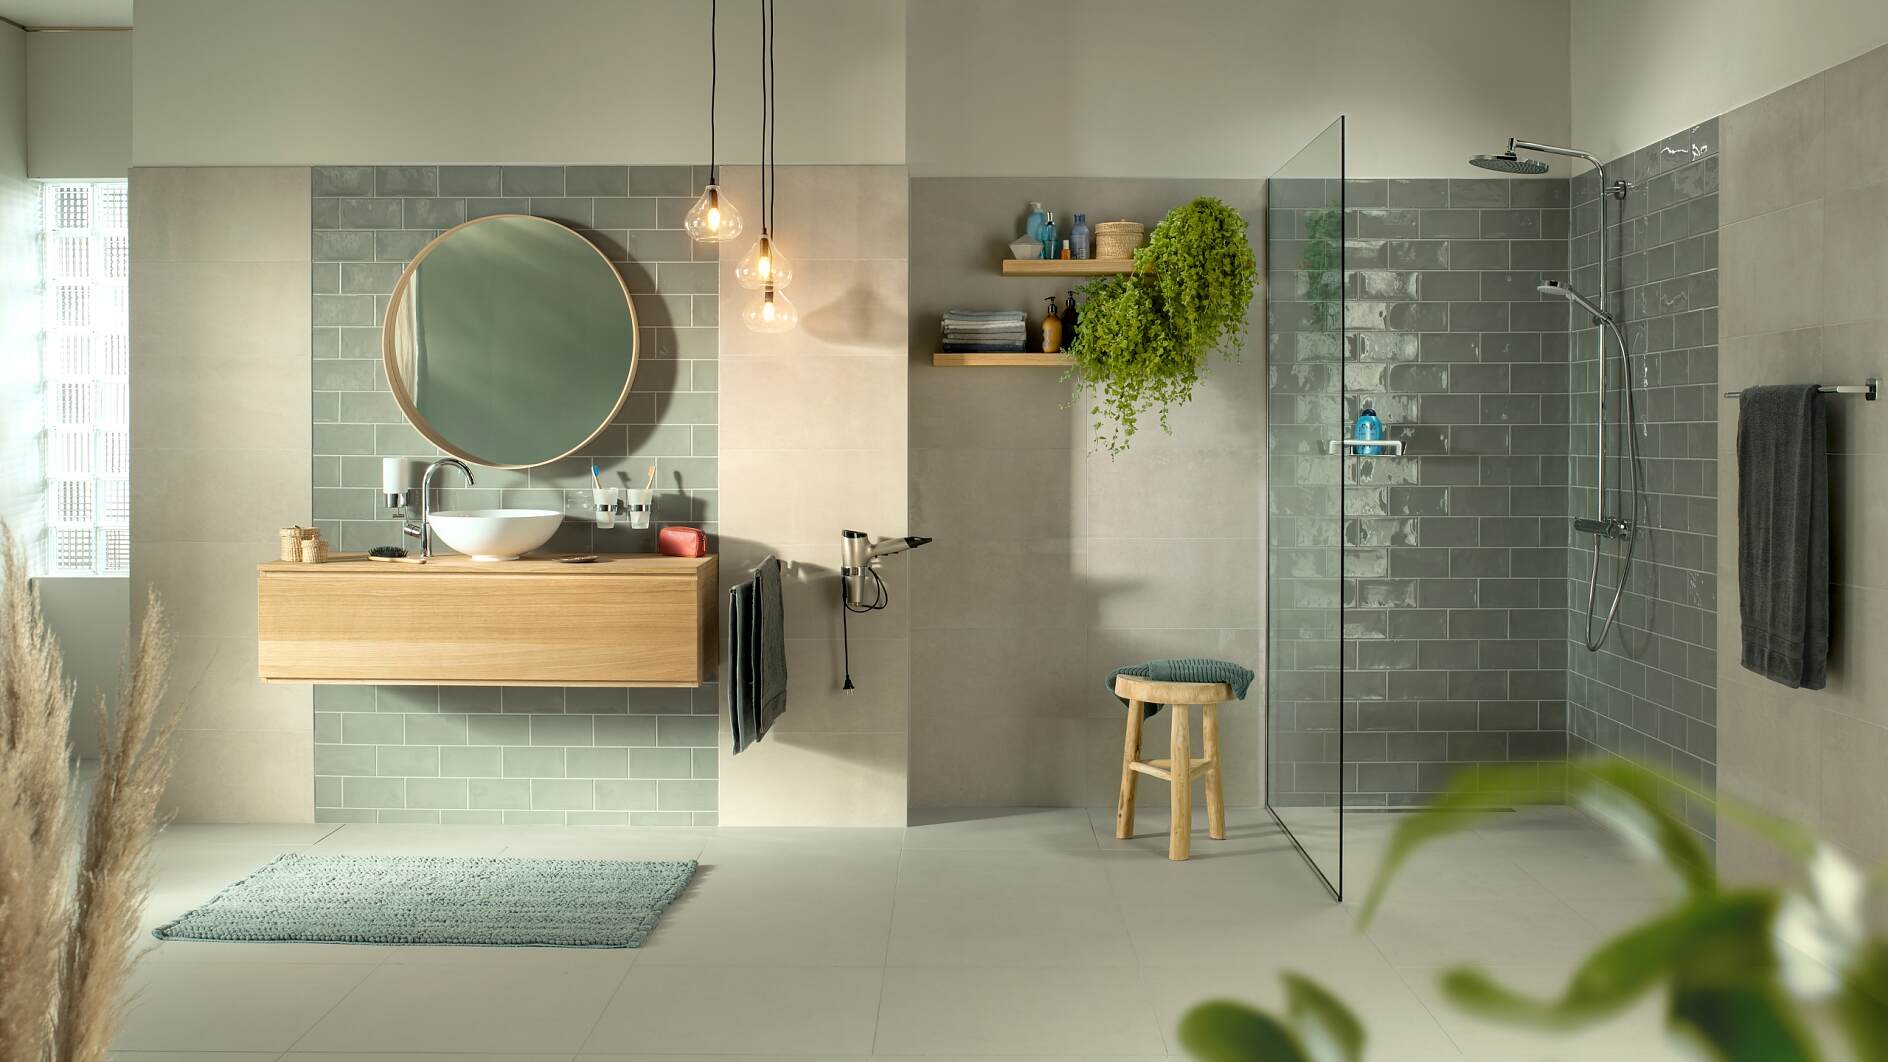 Descubre los mejores accesorios de baño para tu hogar / Homedecoclic